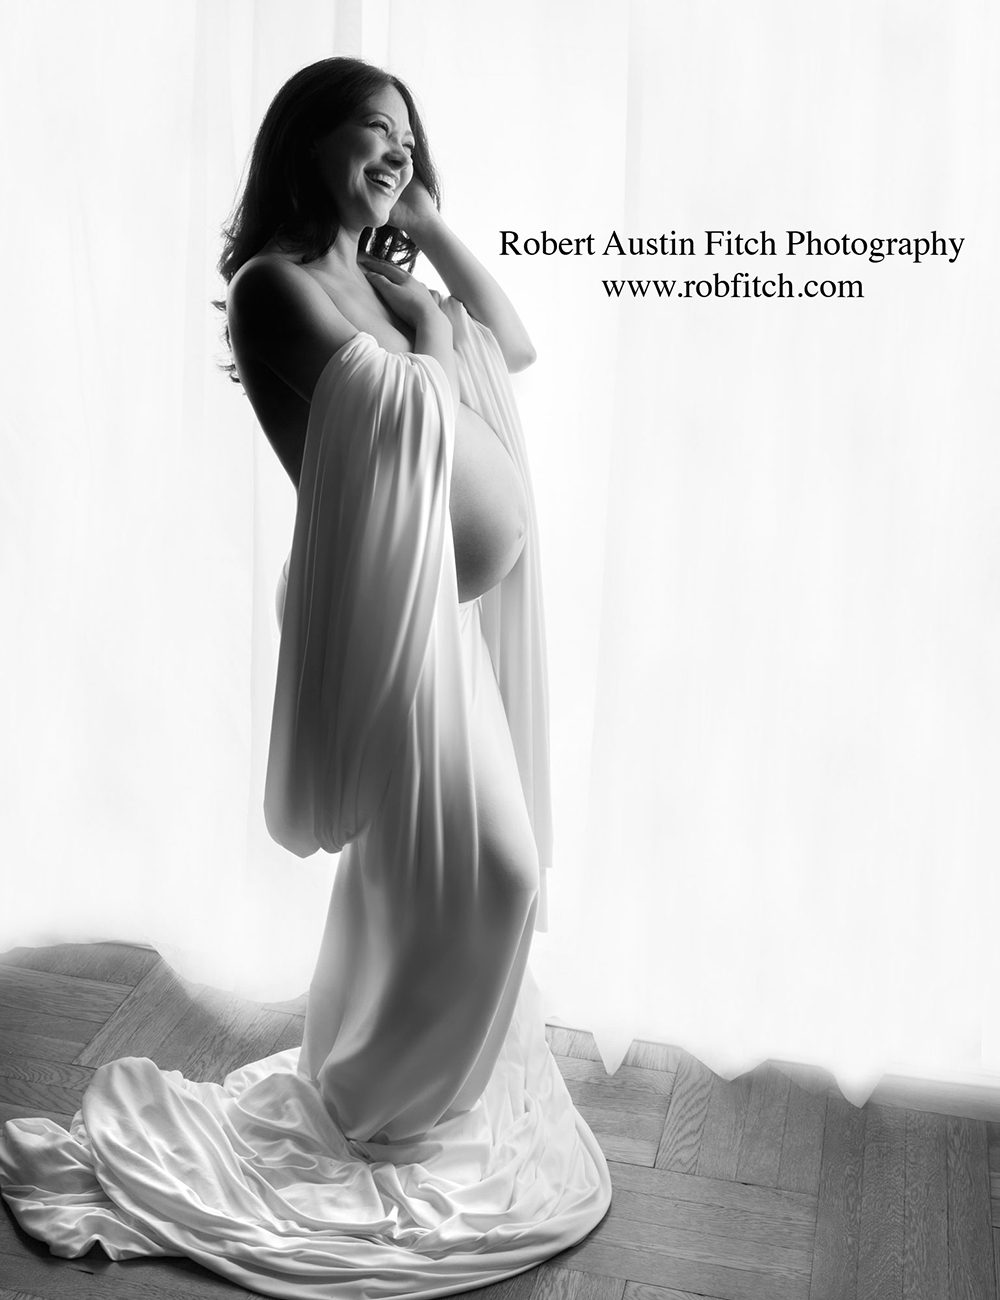 NYC Pregnancy Photography Studio NYC Maternity Photographer NYC Pregnancy Photos